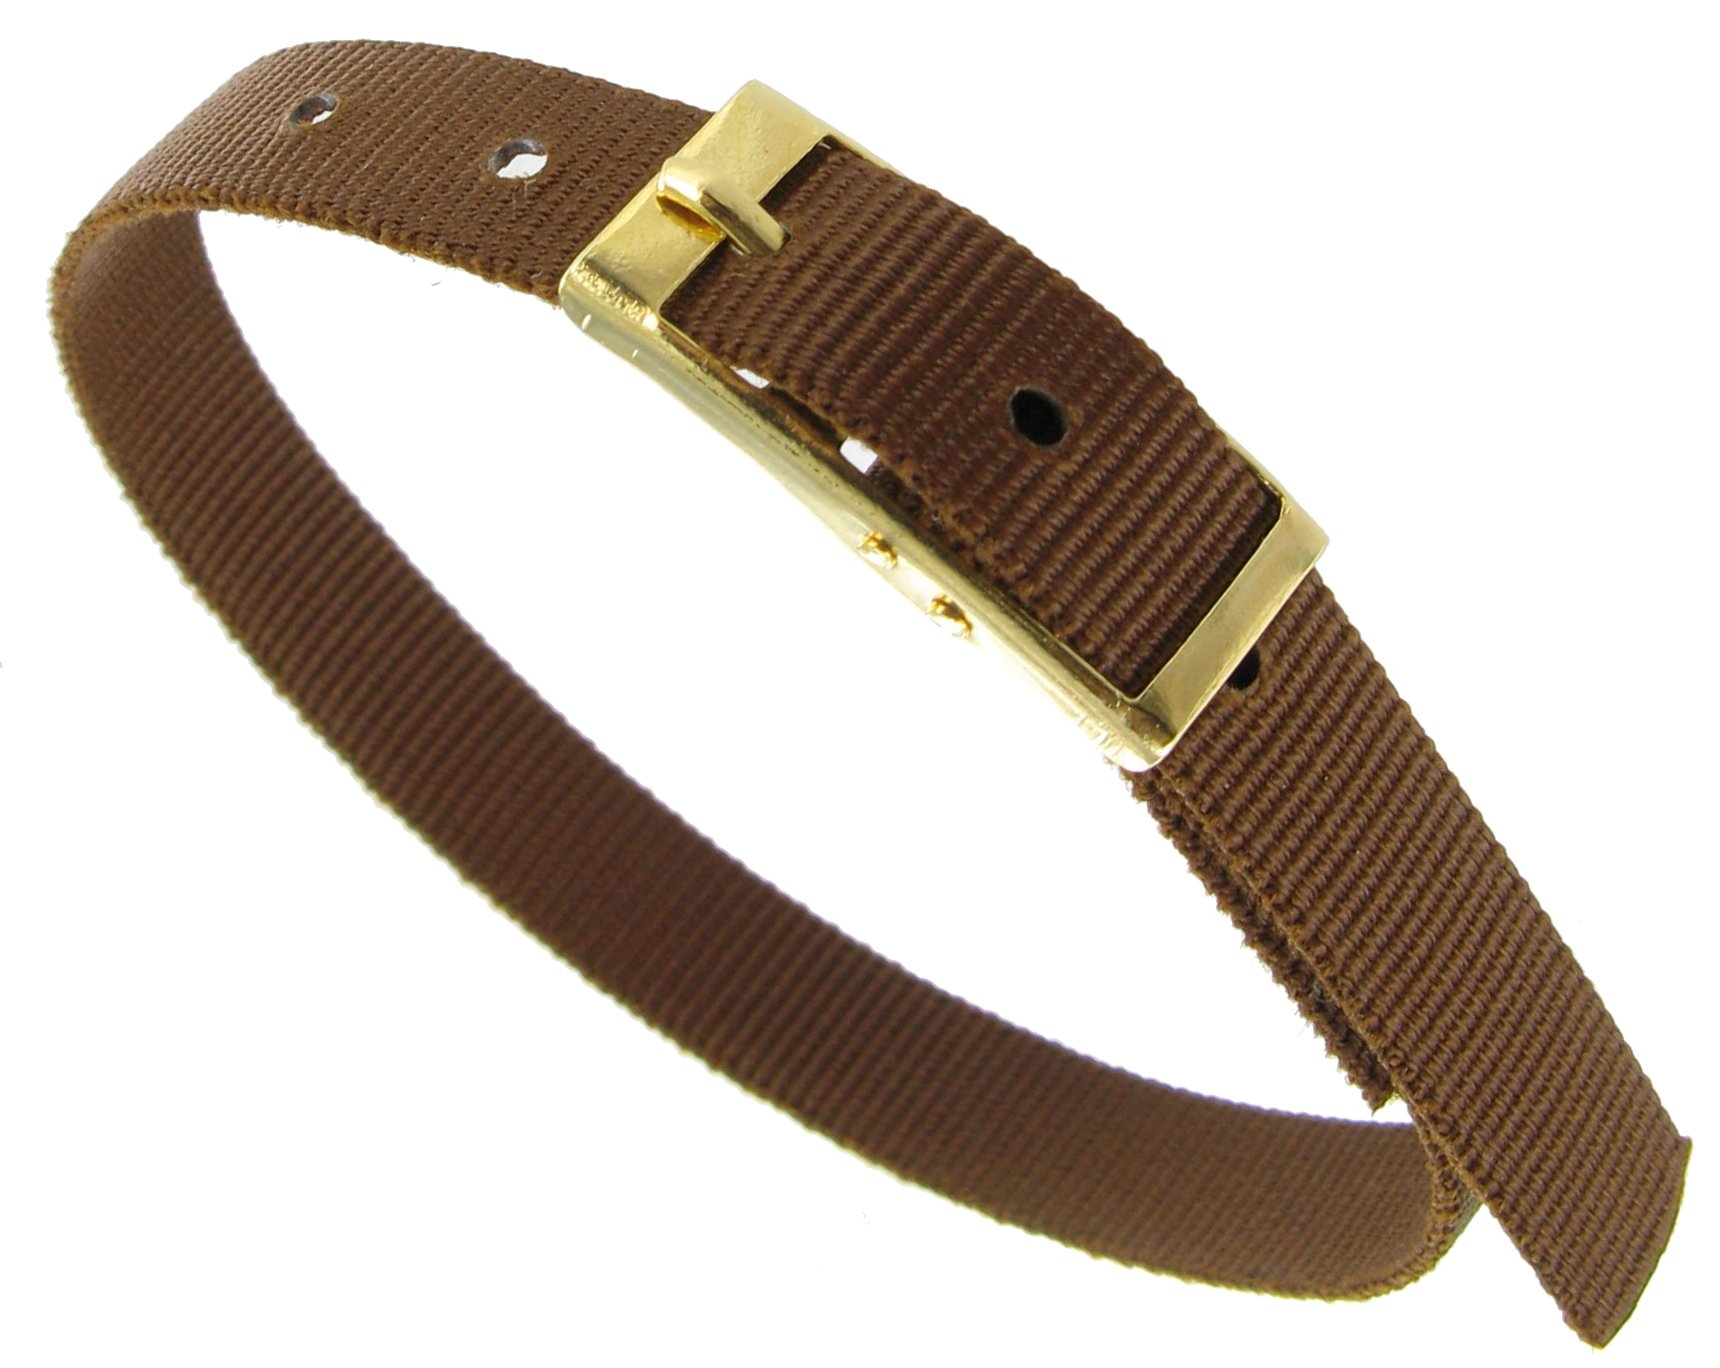 Milano 8mm Slide Through Sports Wrap Nylon Textile Solid Brown Watch Band Strap